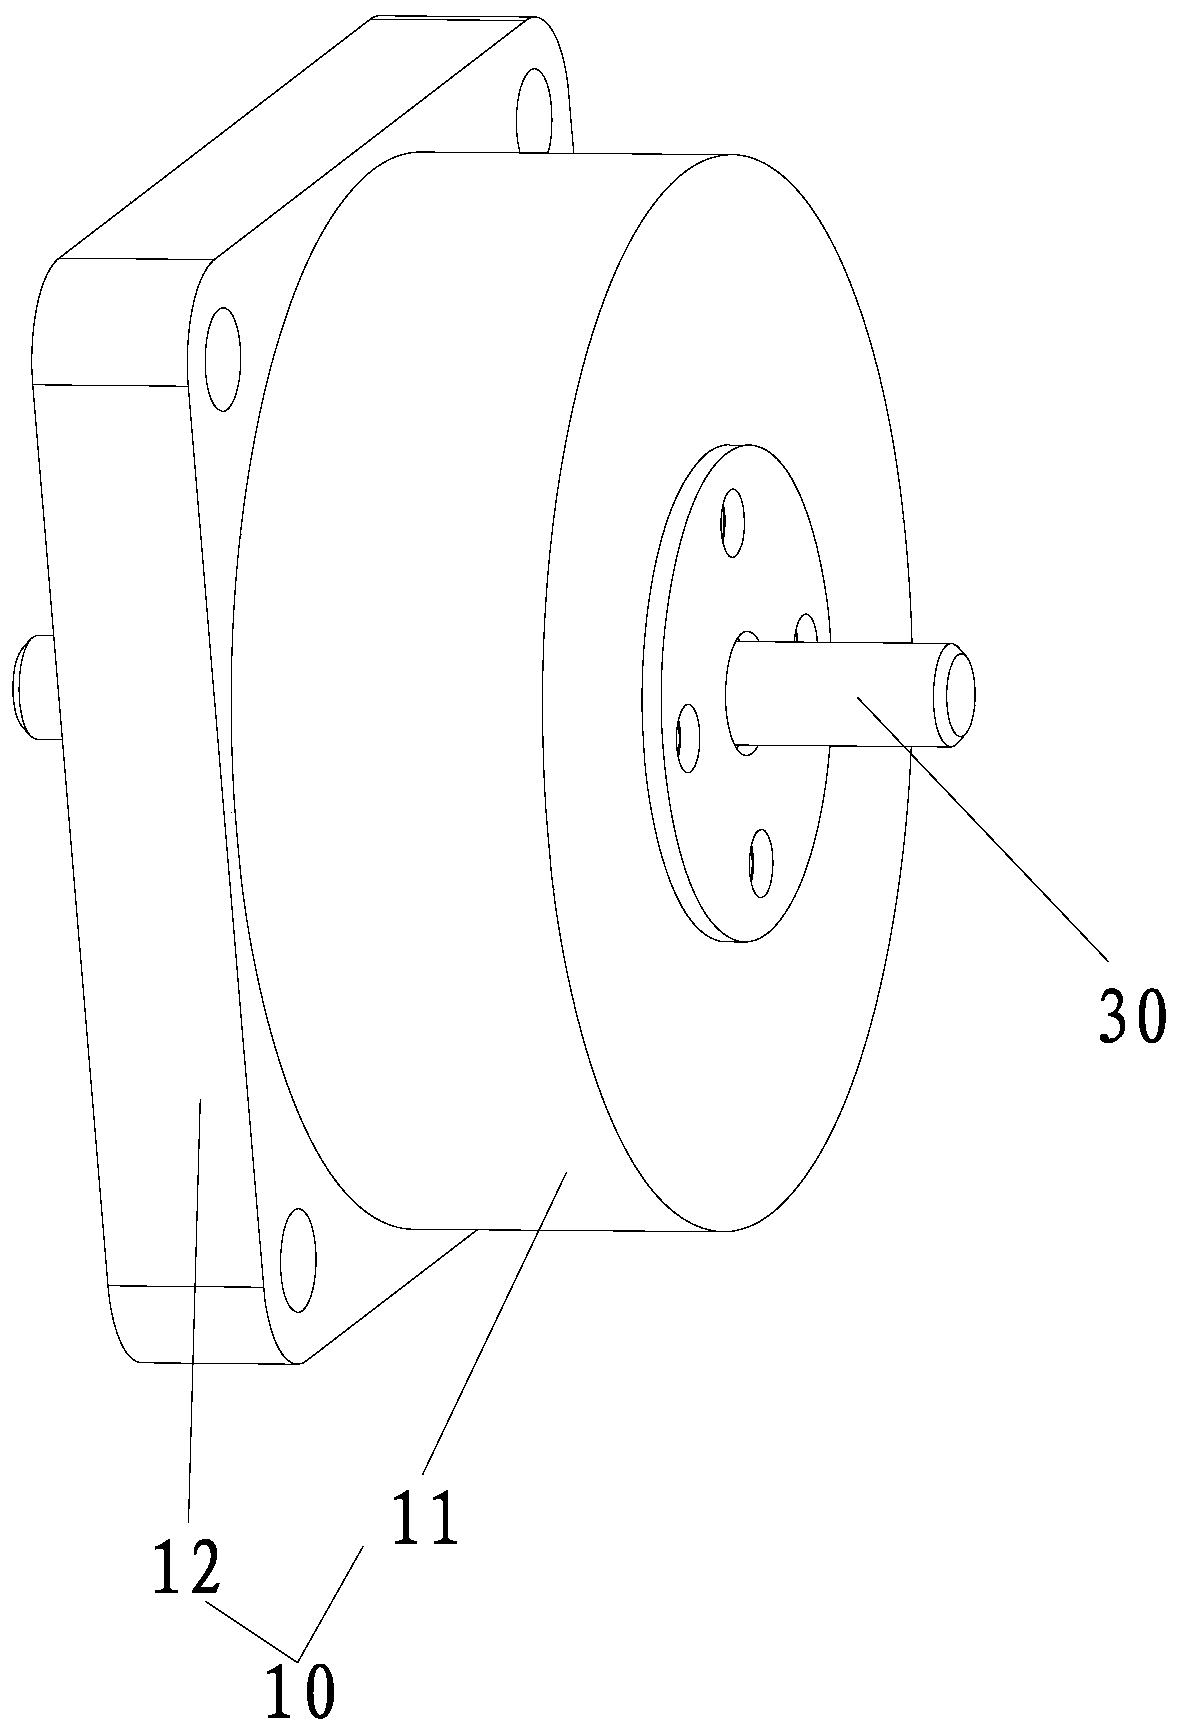 Rotary ultrasonic motor driven by multiple feet in bending vibration mode